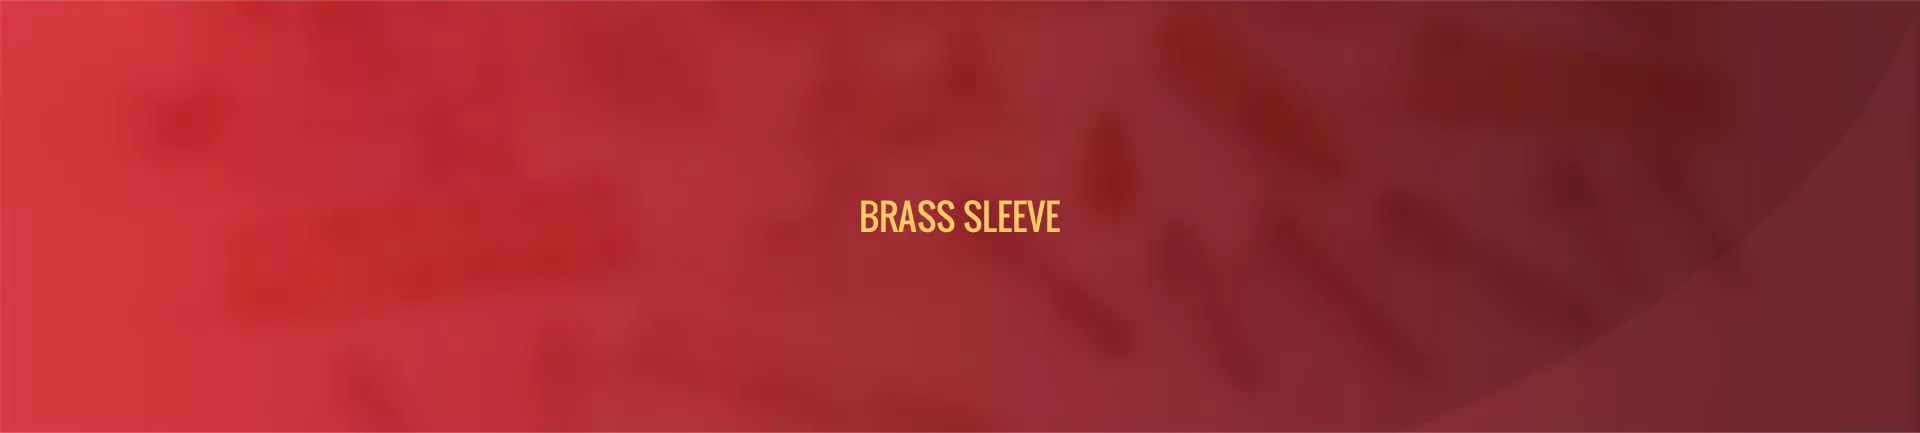 brass_sleeve-banner